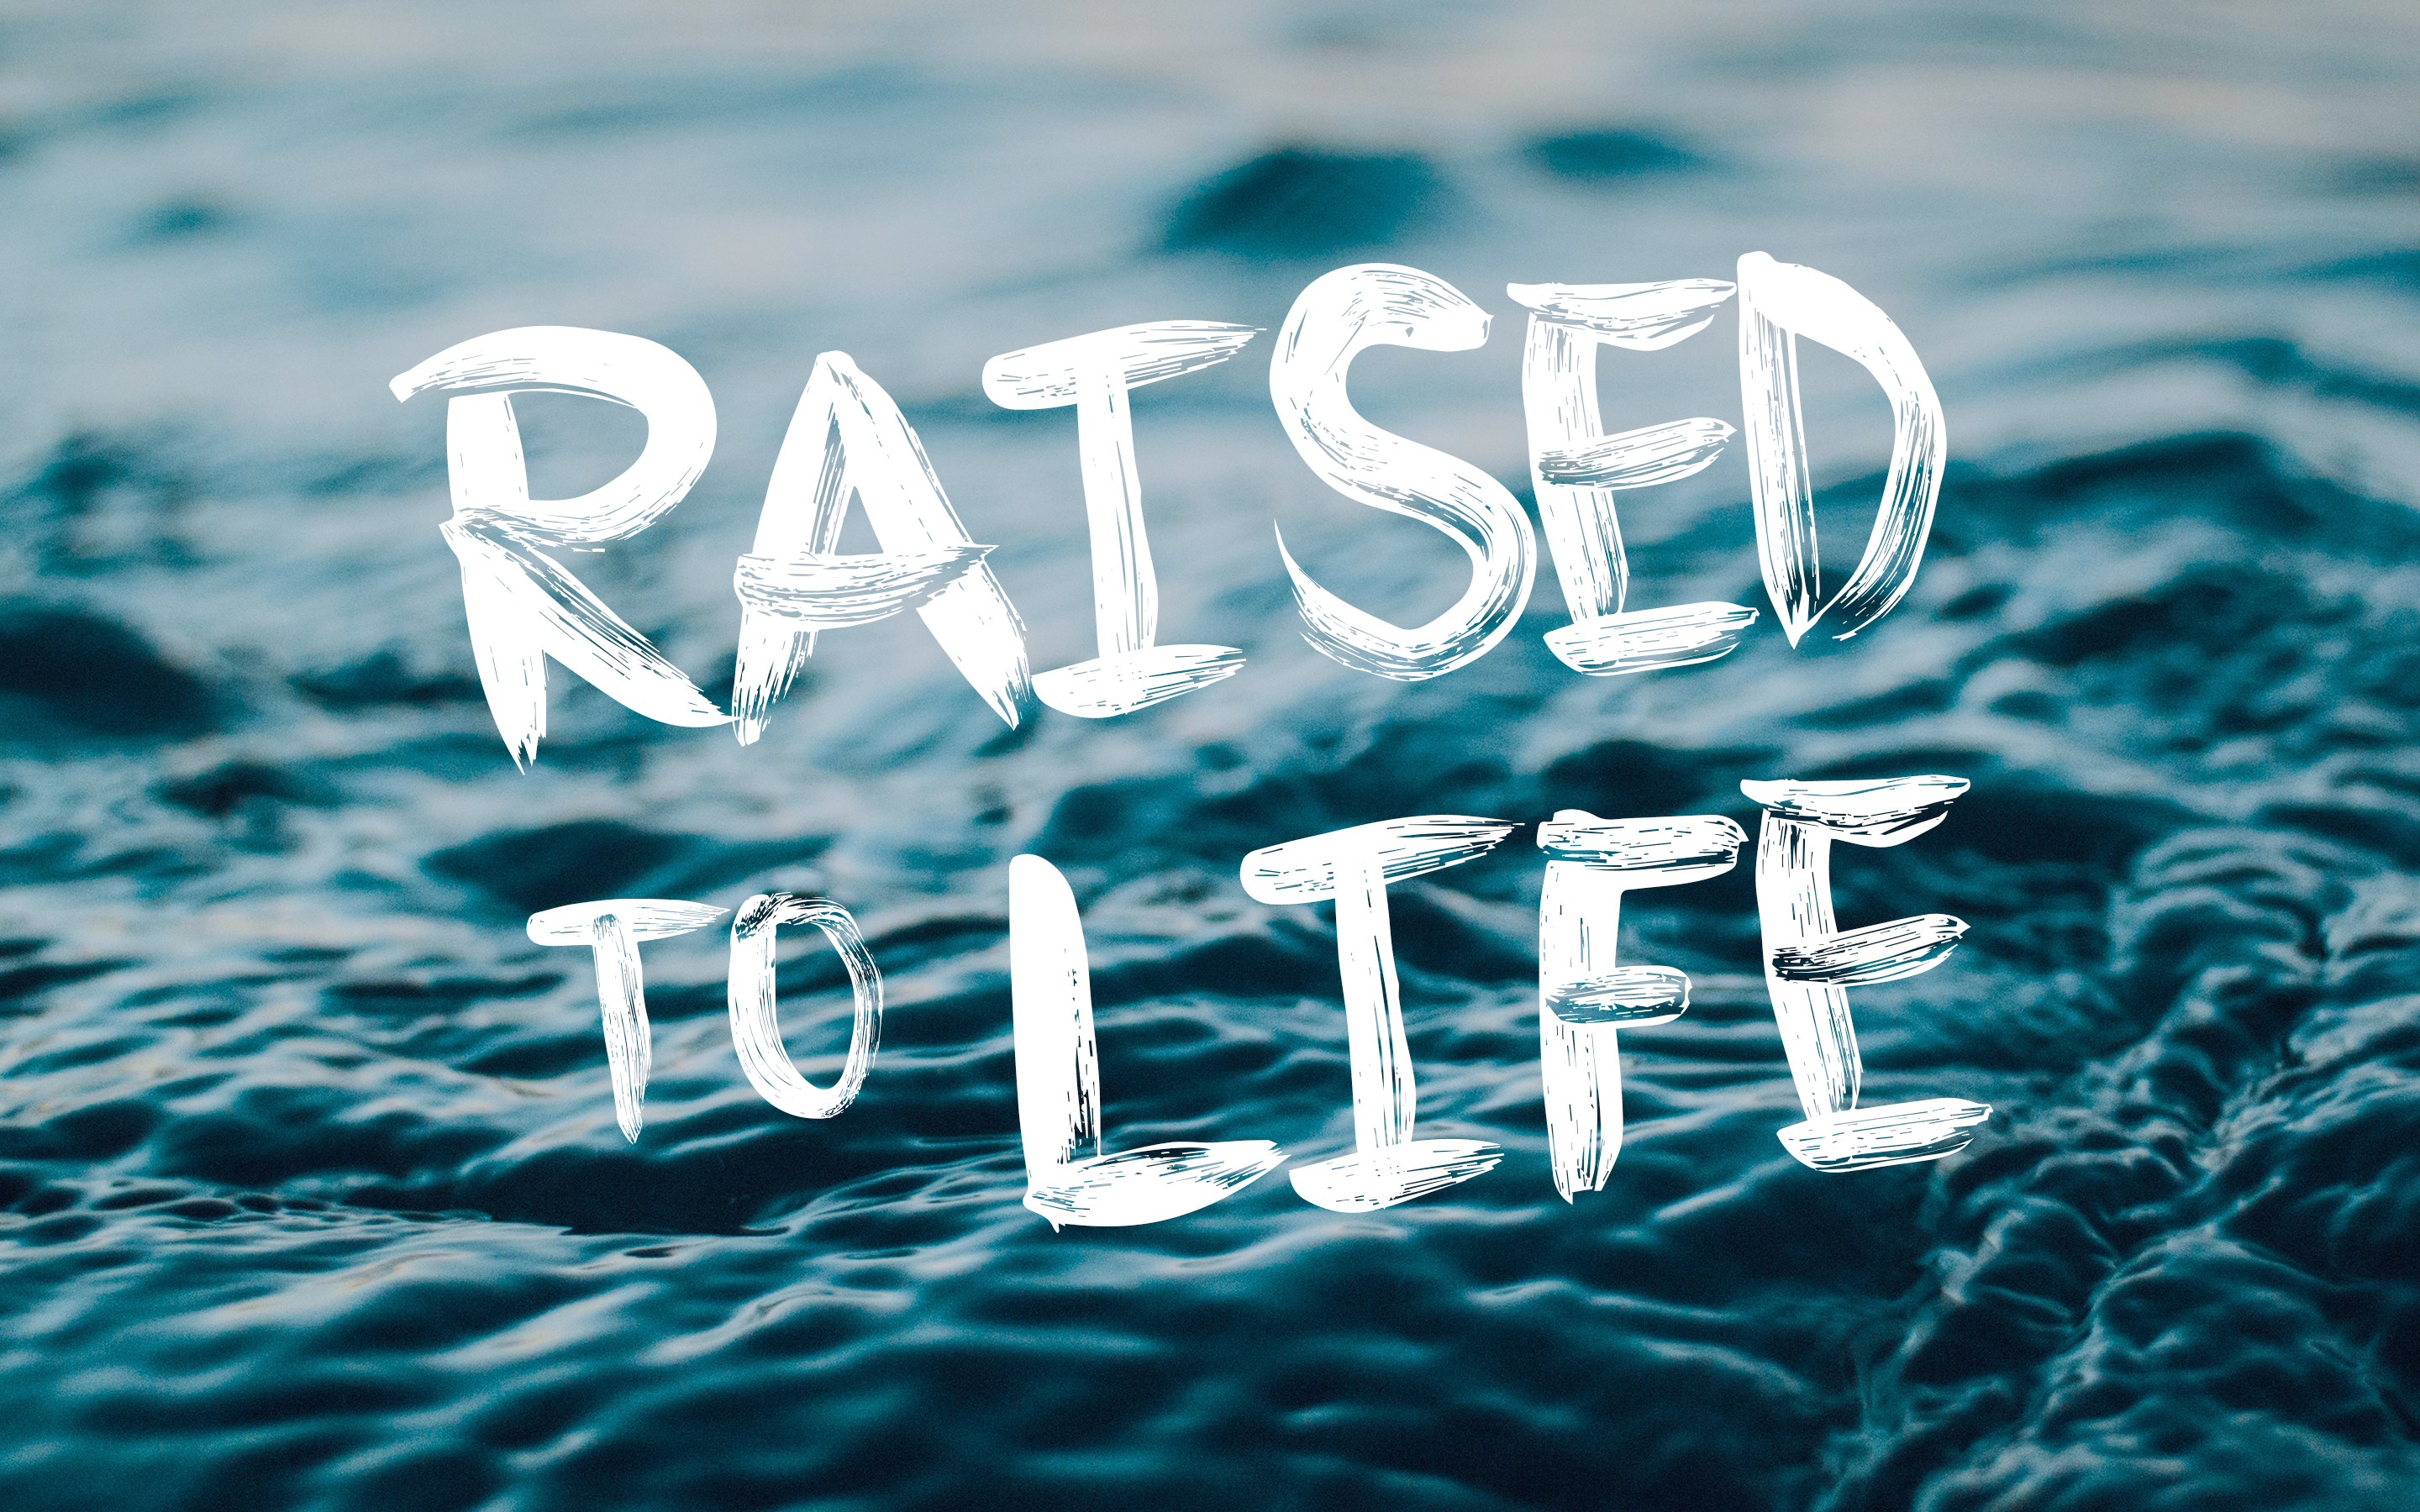 Raised to Life – Peace (9:15)